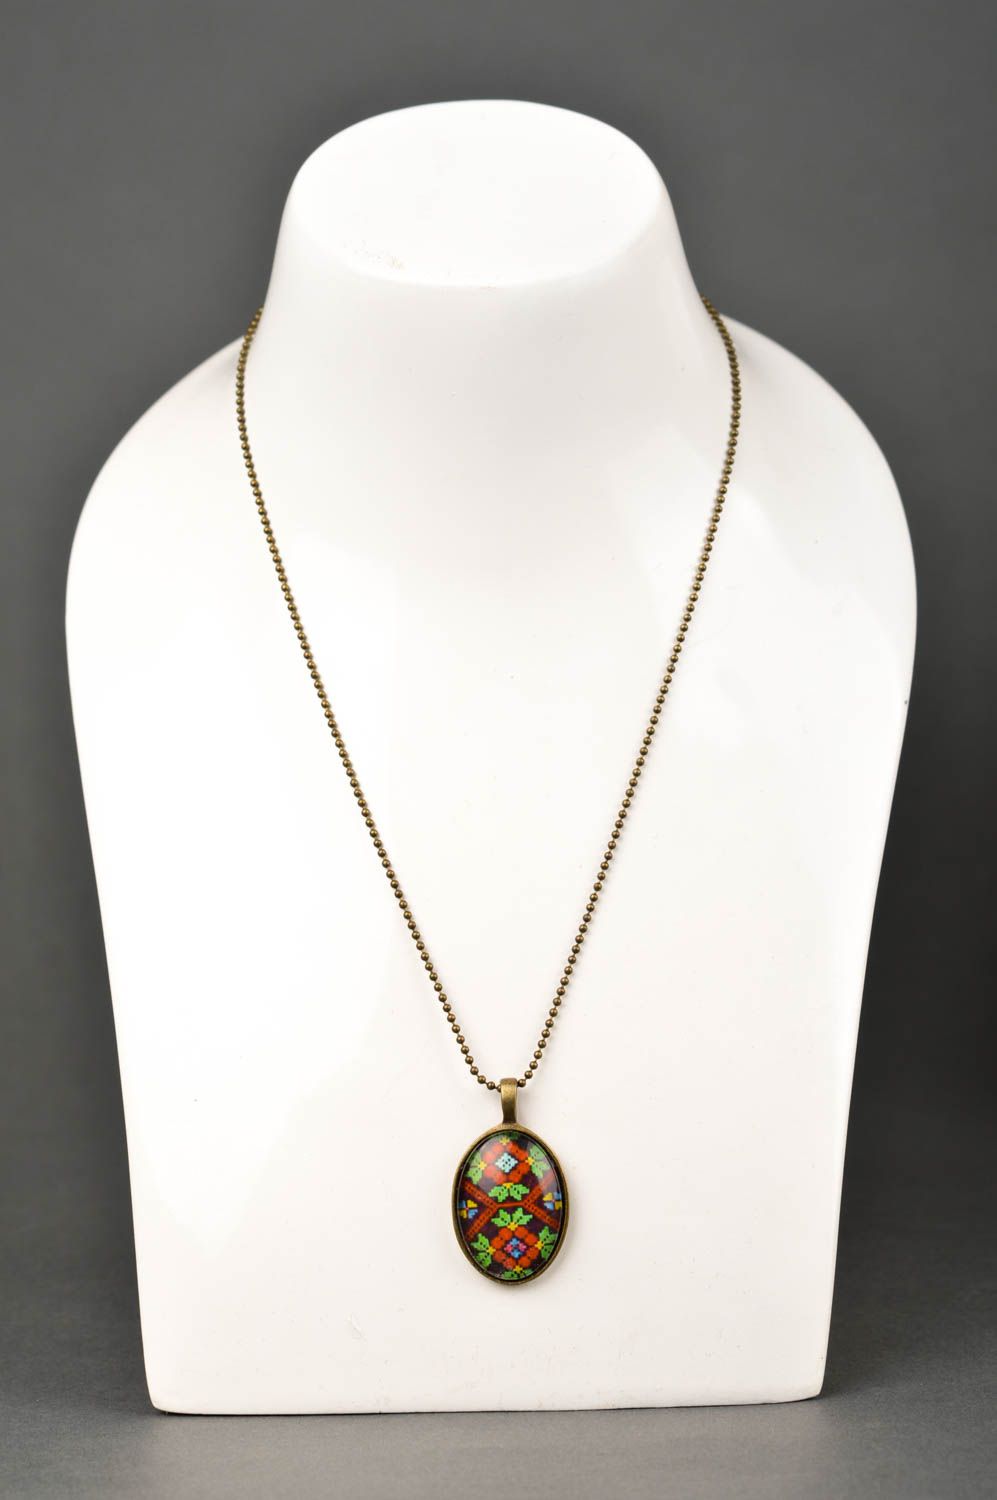 Handmade pendant in ethnic style unusual metal pendant designer jewelry photo 2